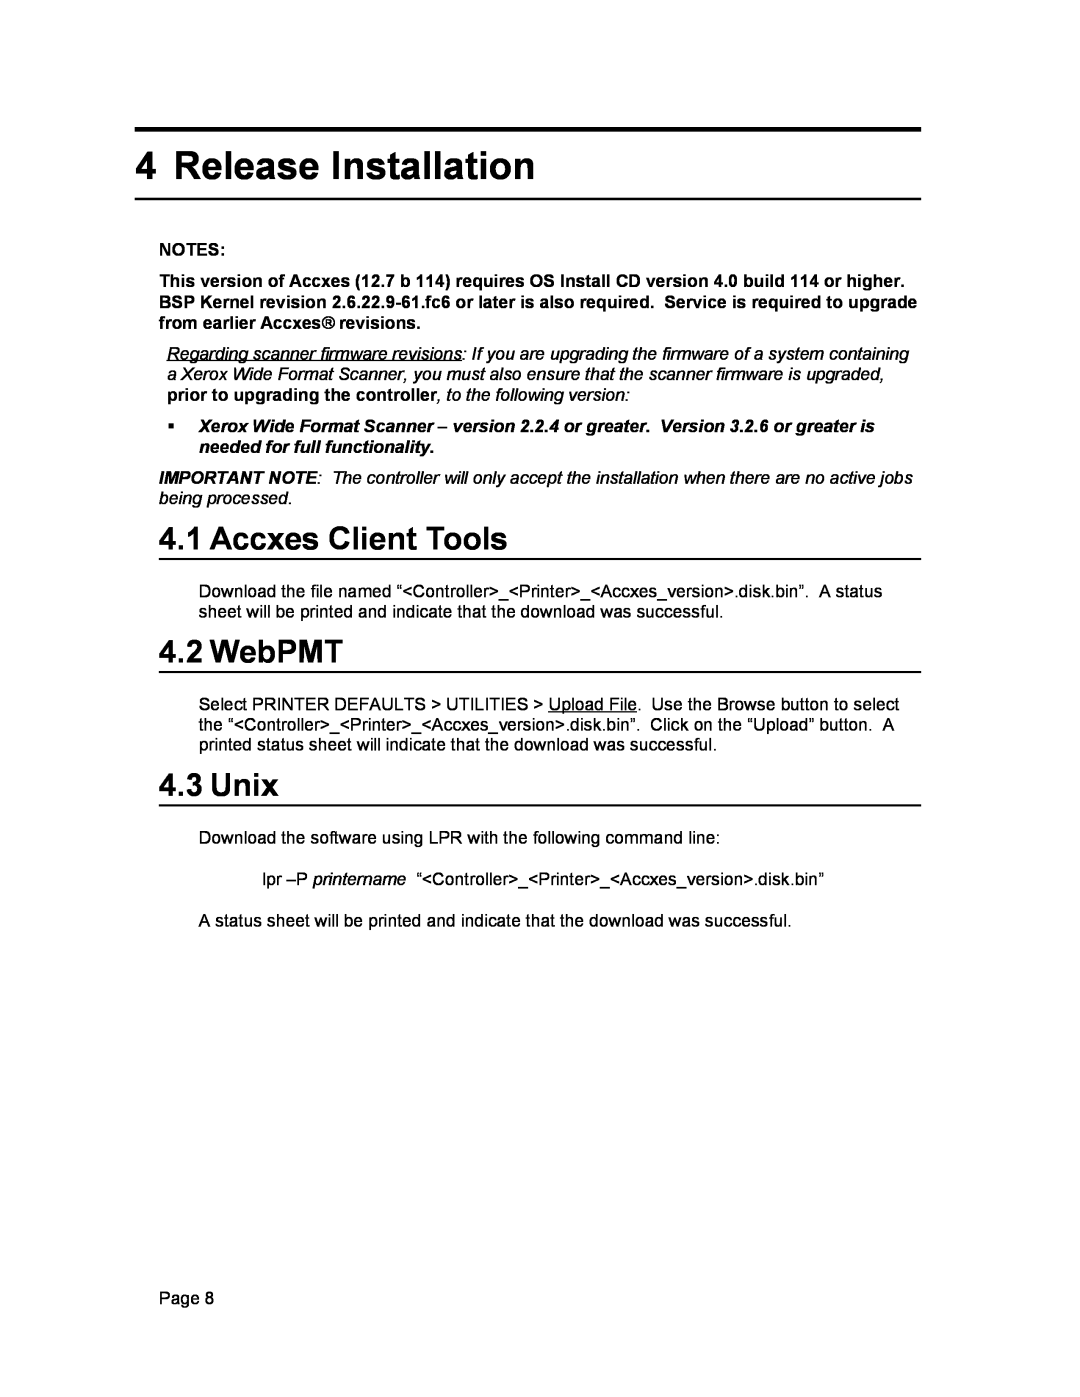 Xerox 12.7 B 114 manual Release Installation, Accxes Client Tools, WebPMT, Unix 